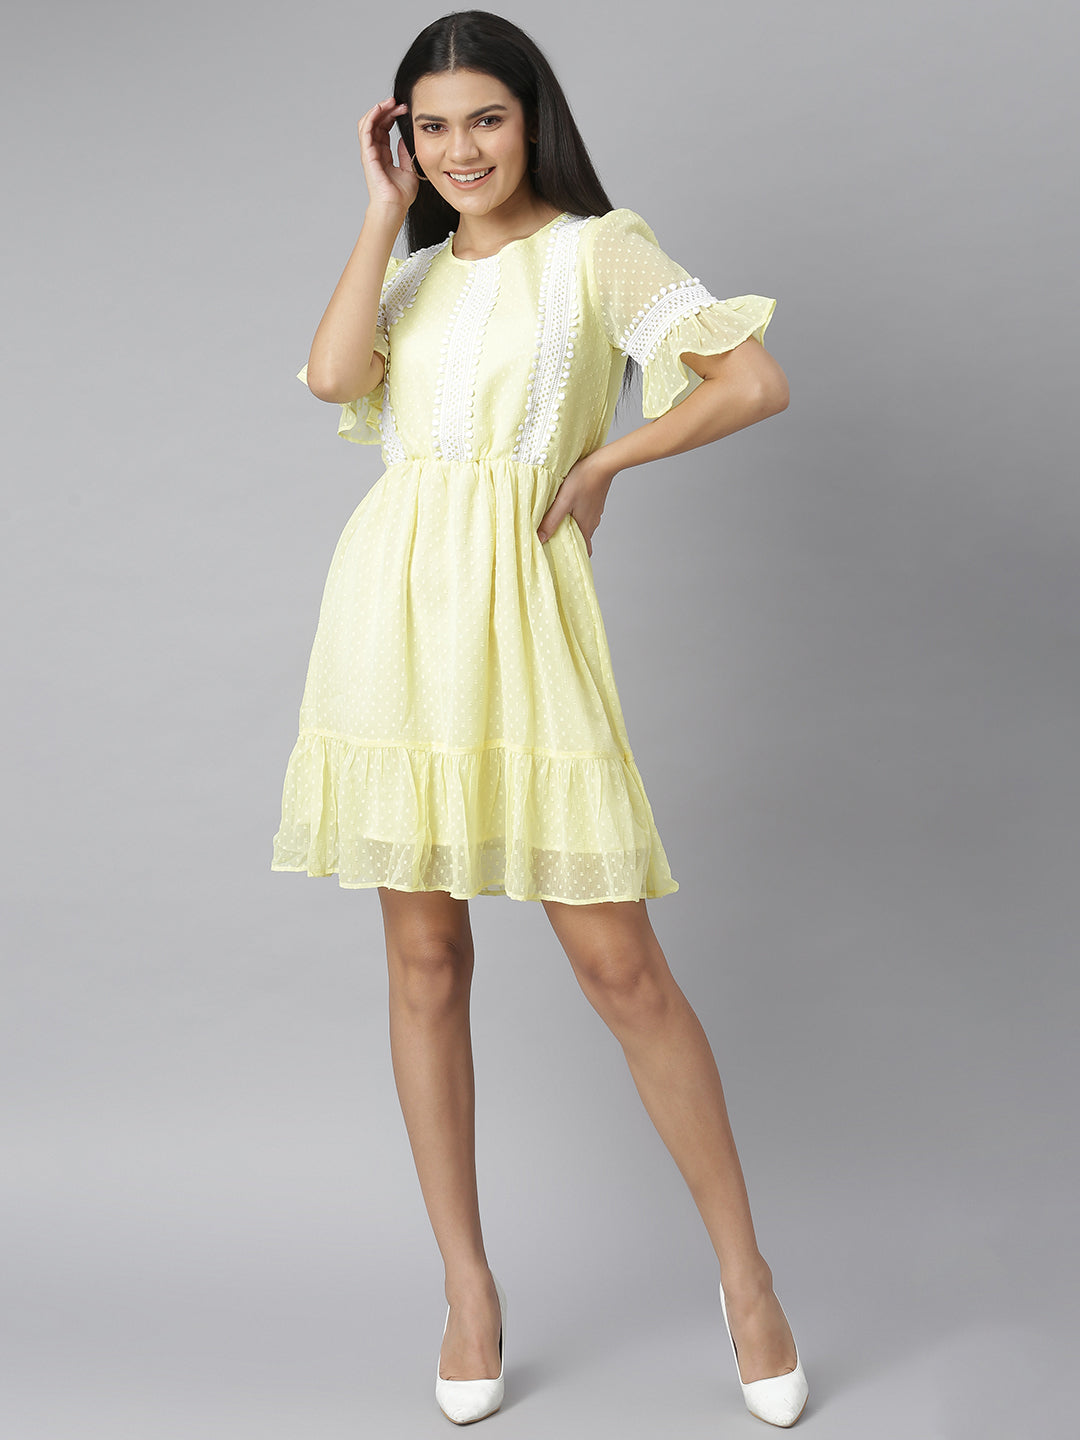 Yellow-Chiffon-Self-Design-Dress-With-Lace-Insets